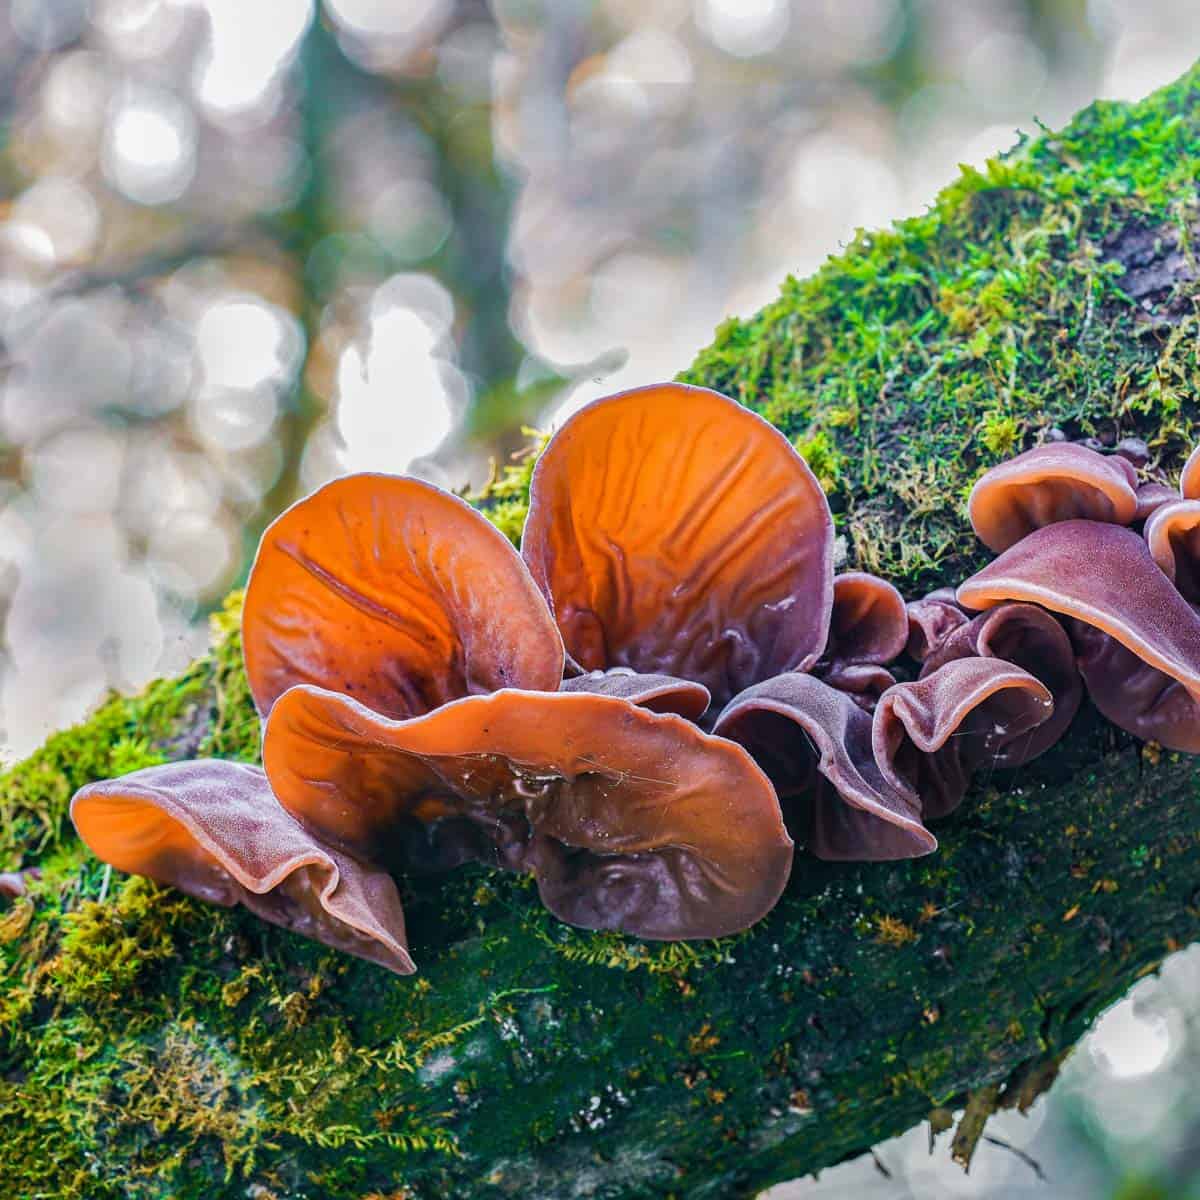 Wood ear mushrooms growing on a tree.